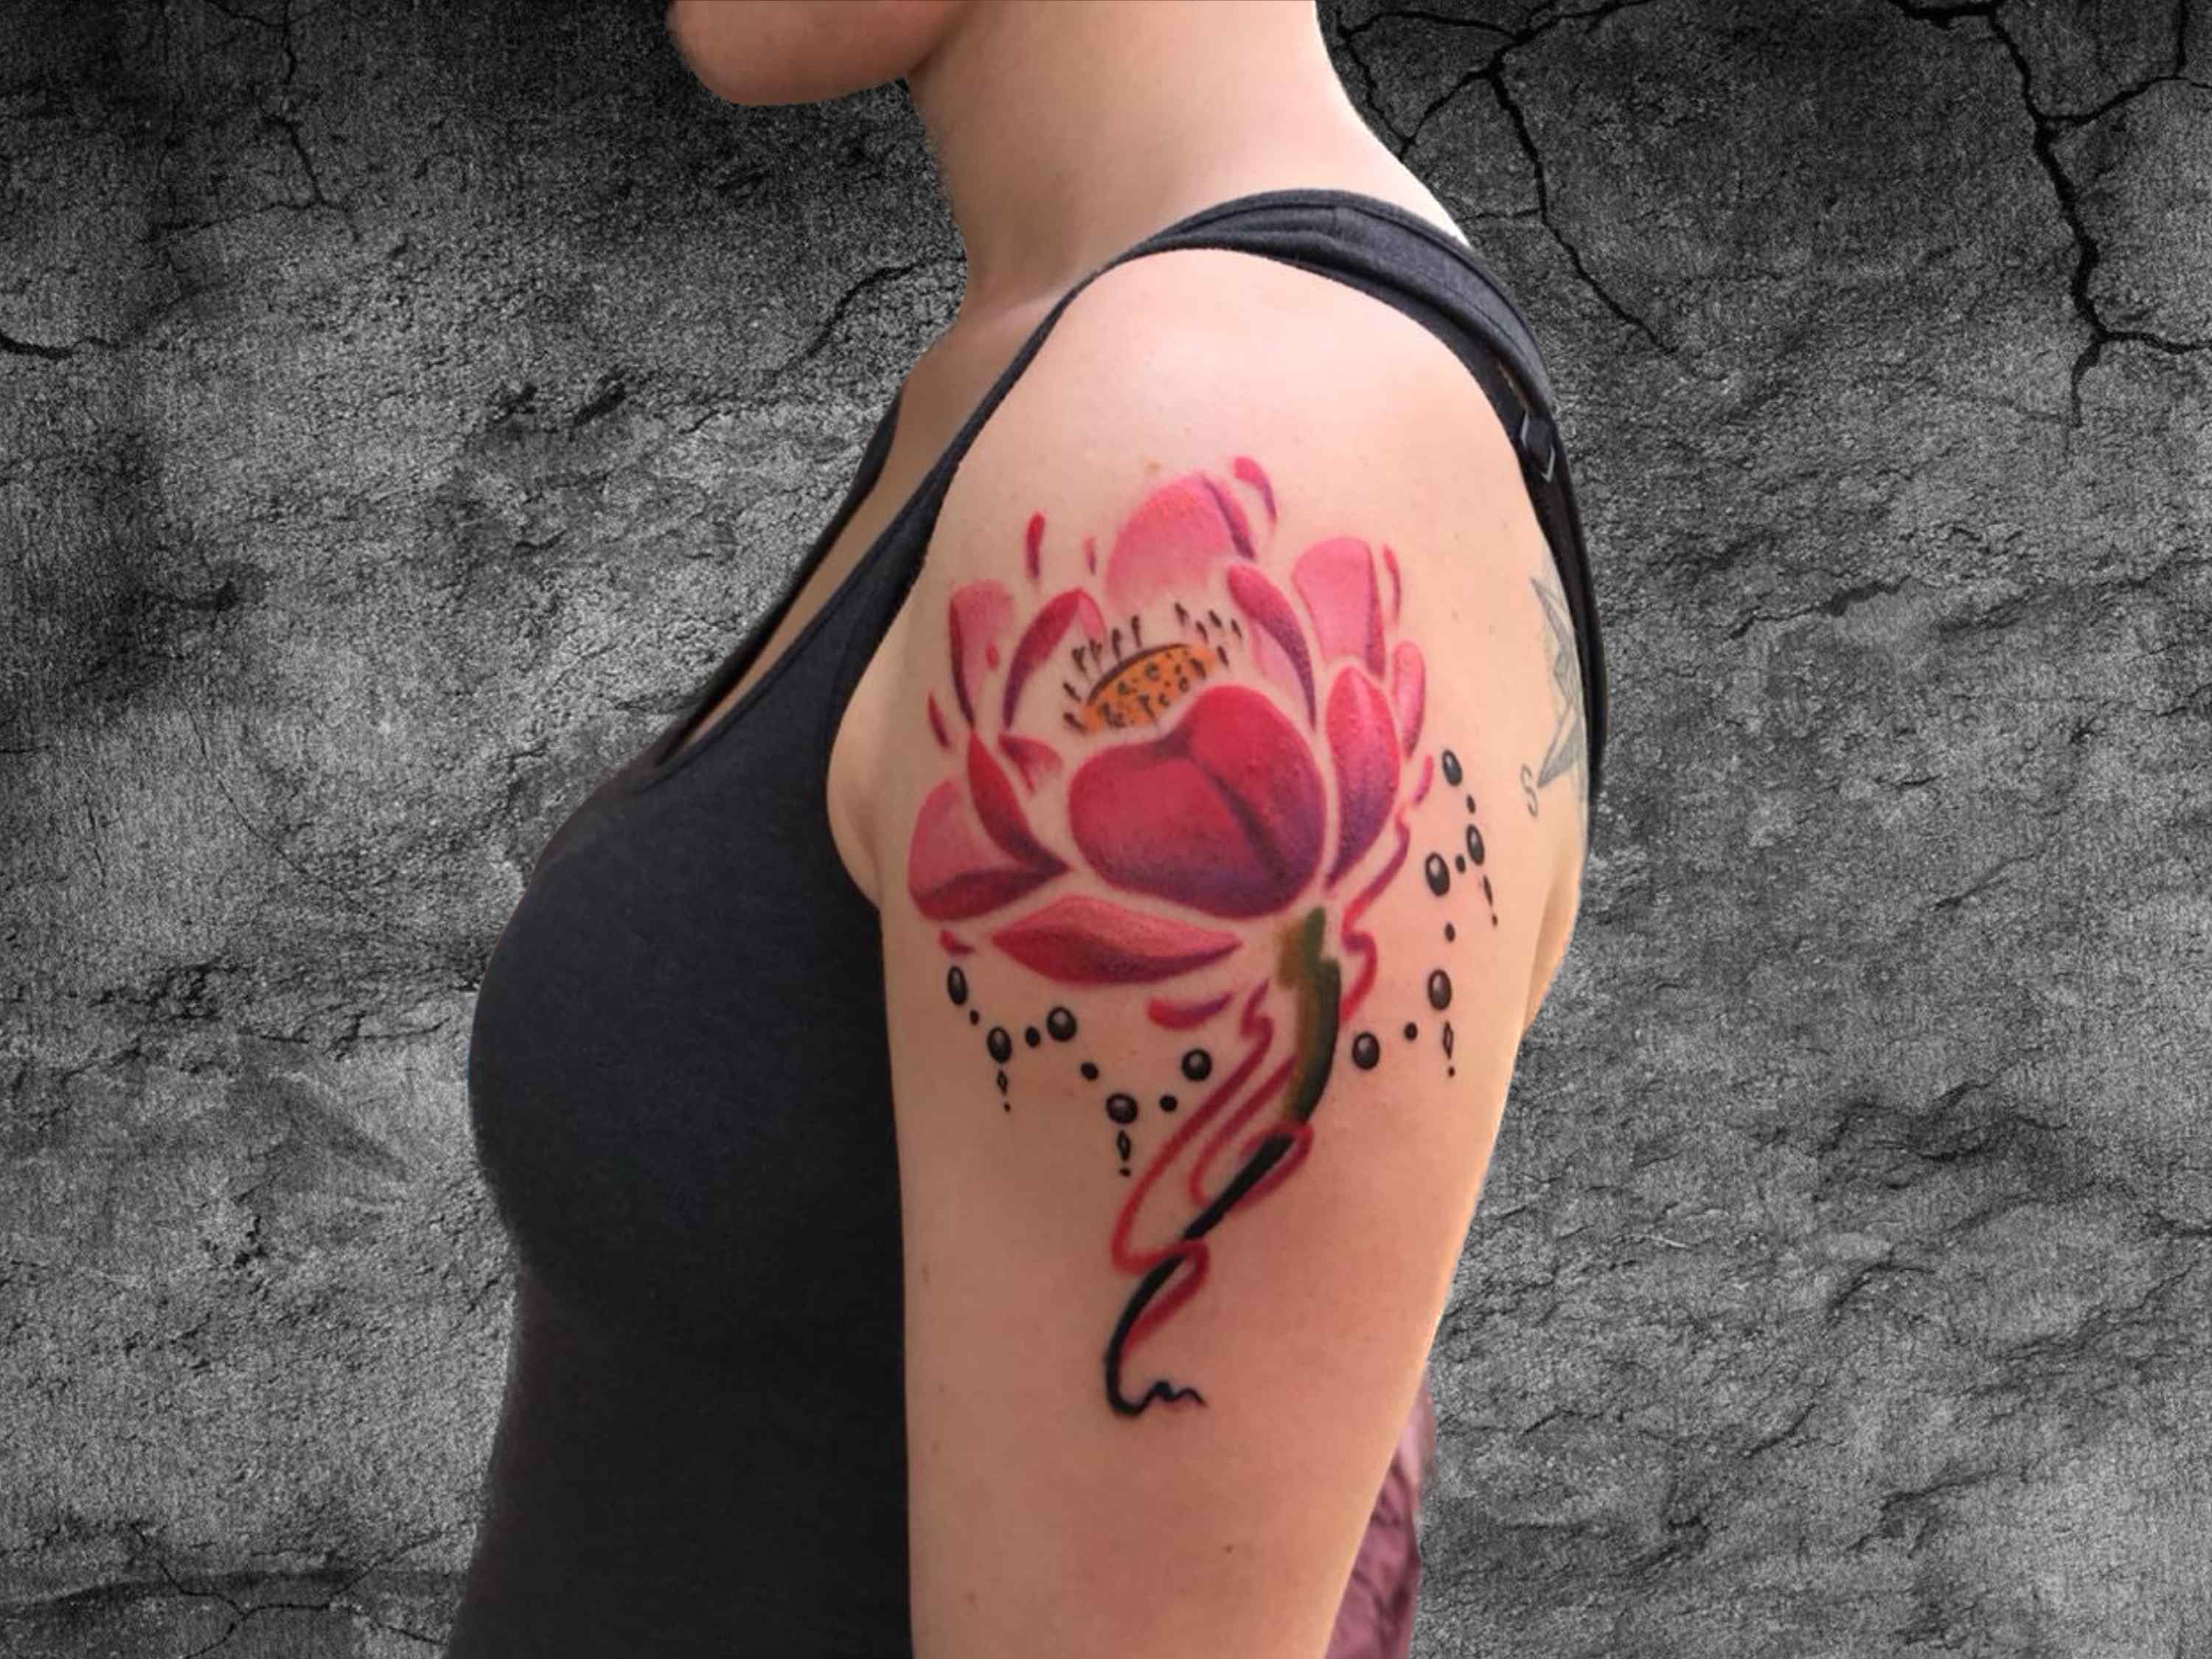 Tattoosday (A Tattoo Blog): Alison's Violet Lotus